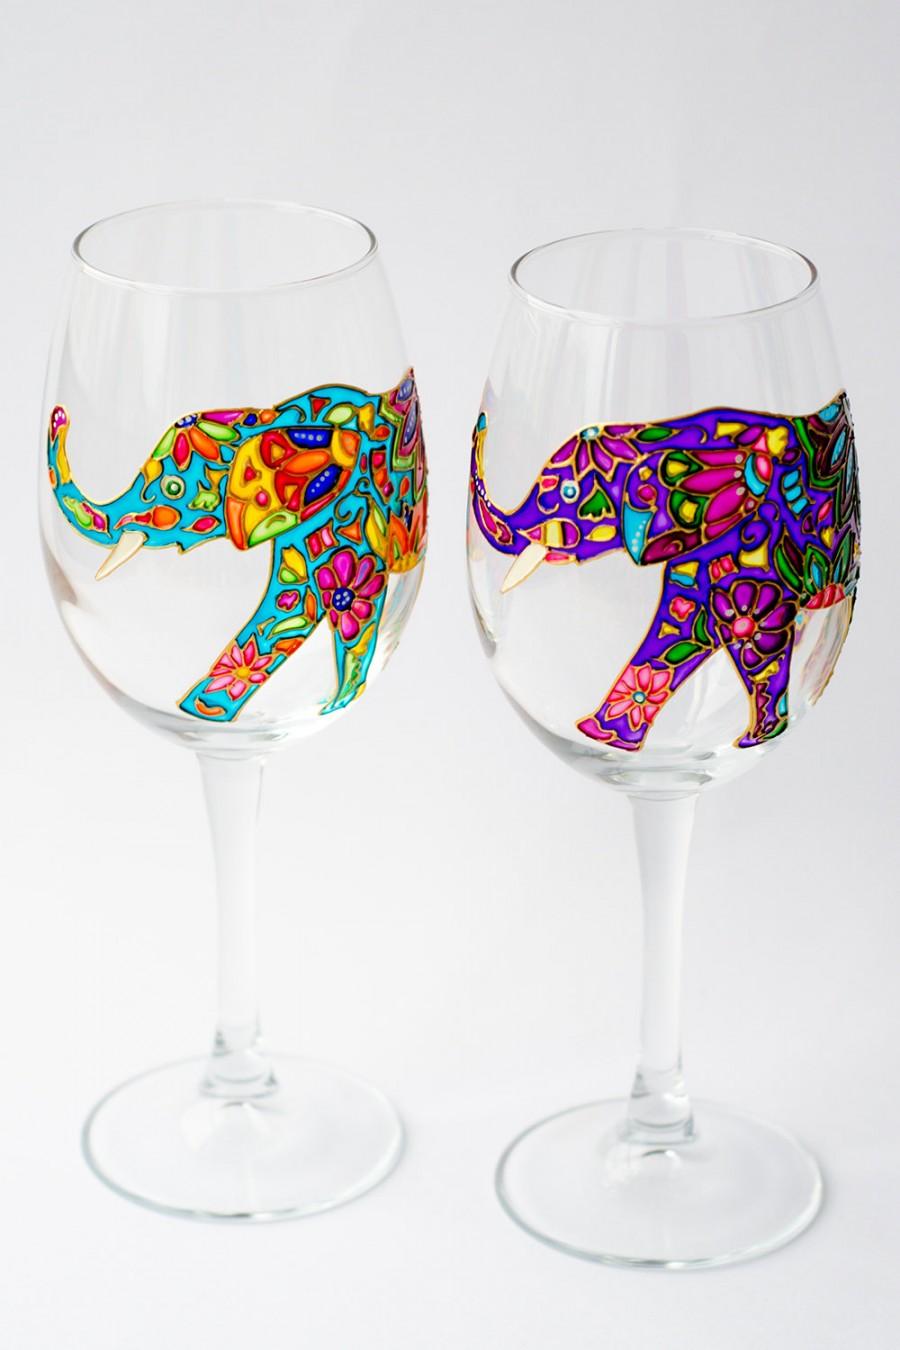 Wedding - Elephant Wine Glasses Hand Painted, Wine glass for Bridesmaid Wedding Glasses, Bohemian Elephant, Toasting glasses - $54.50 USD